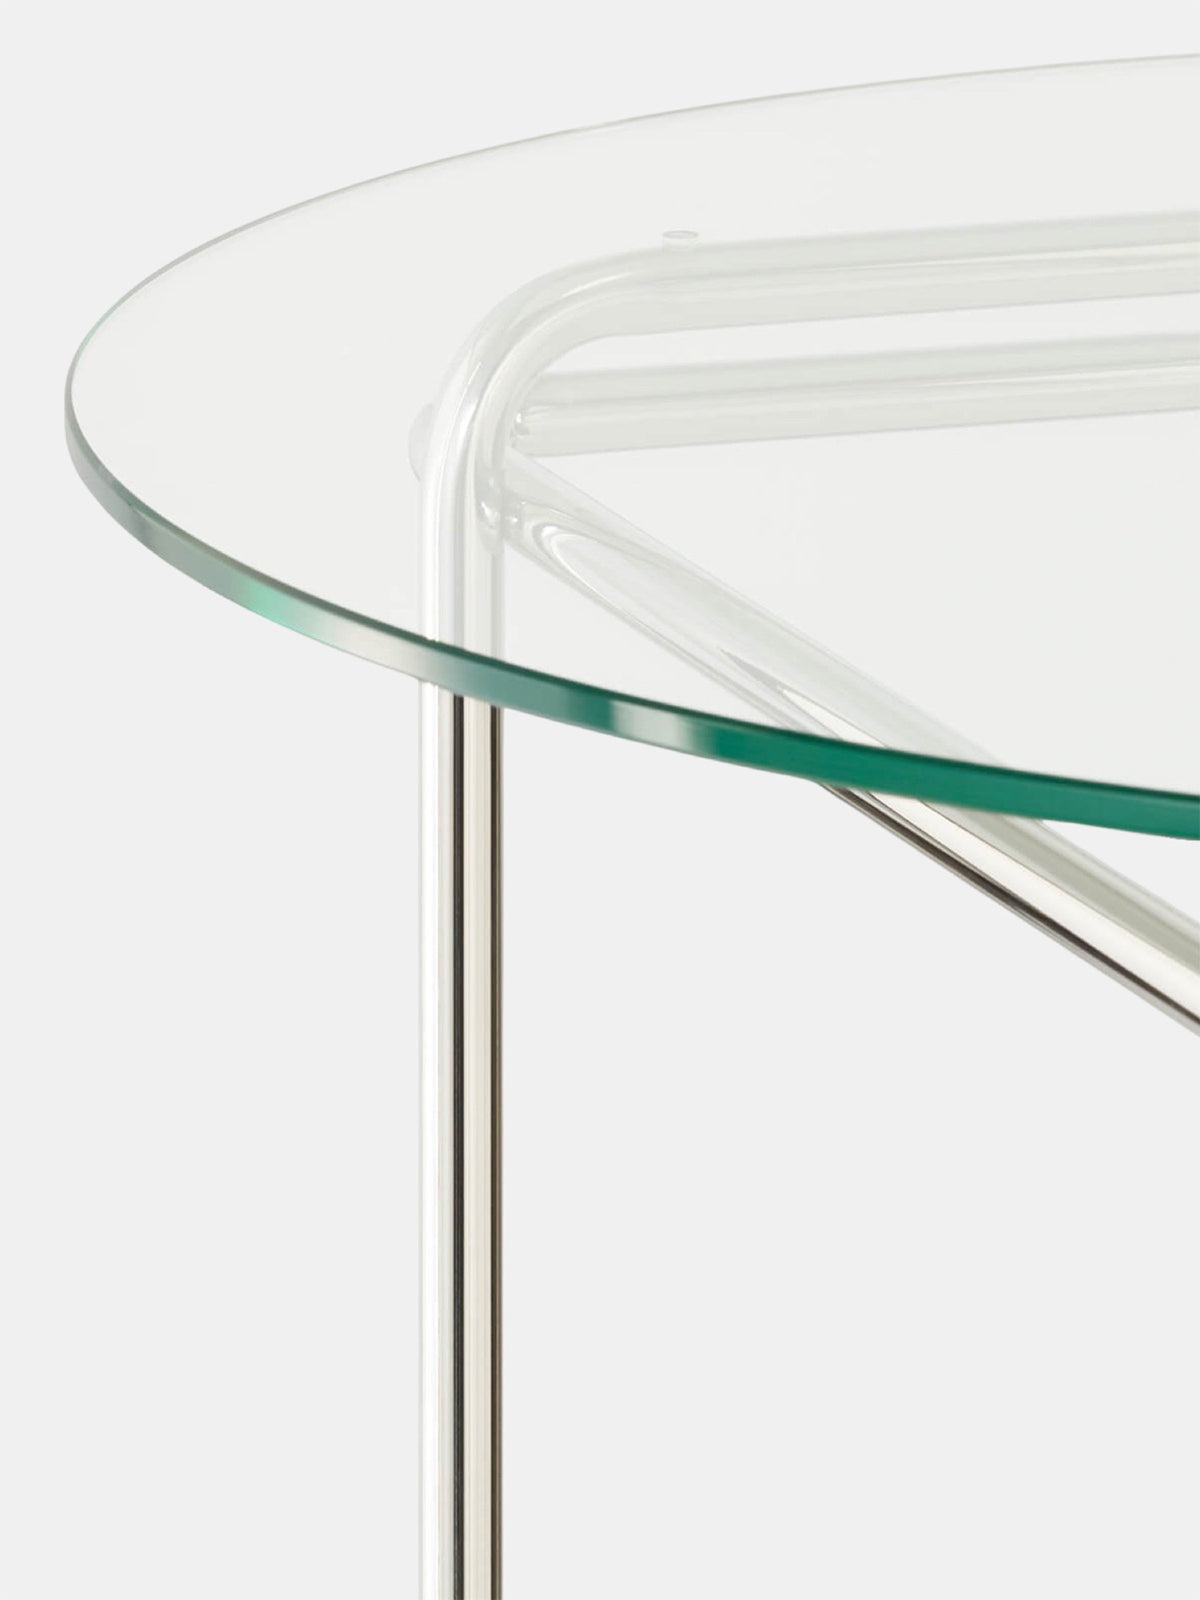 K40 Table designed by Marcel Breuer